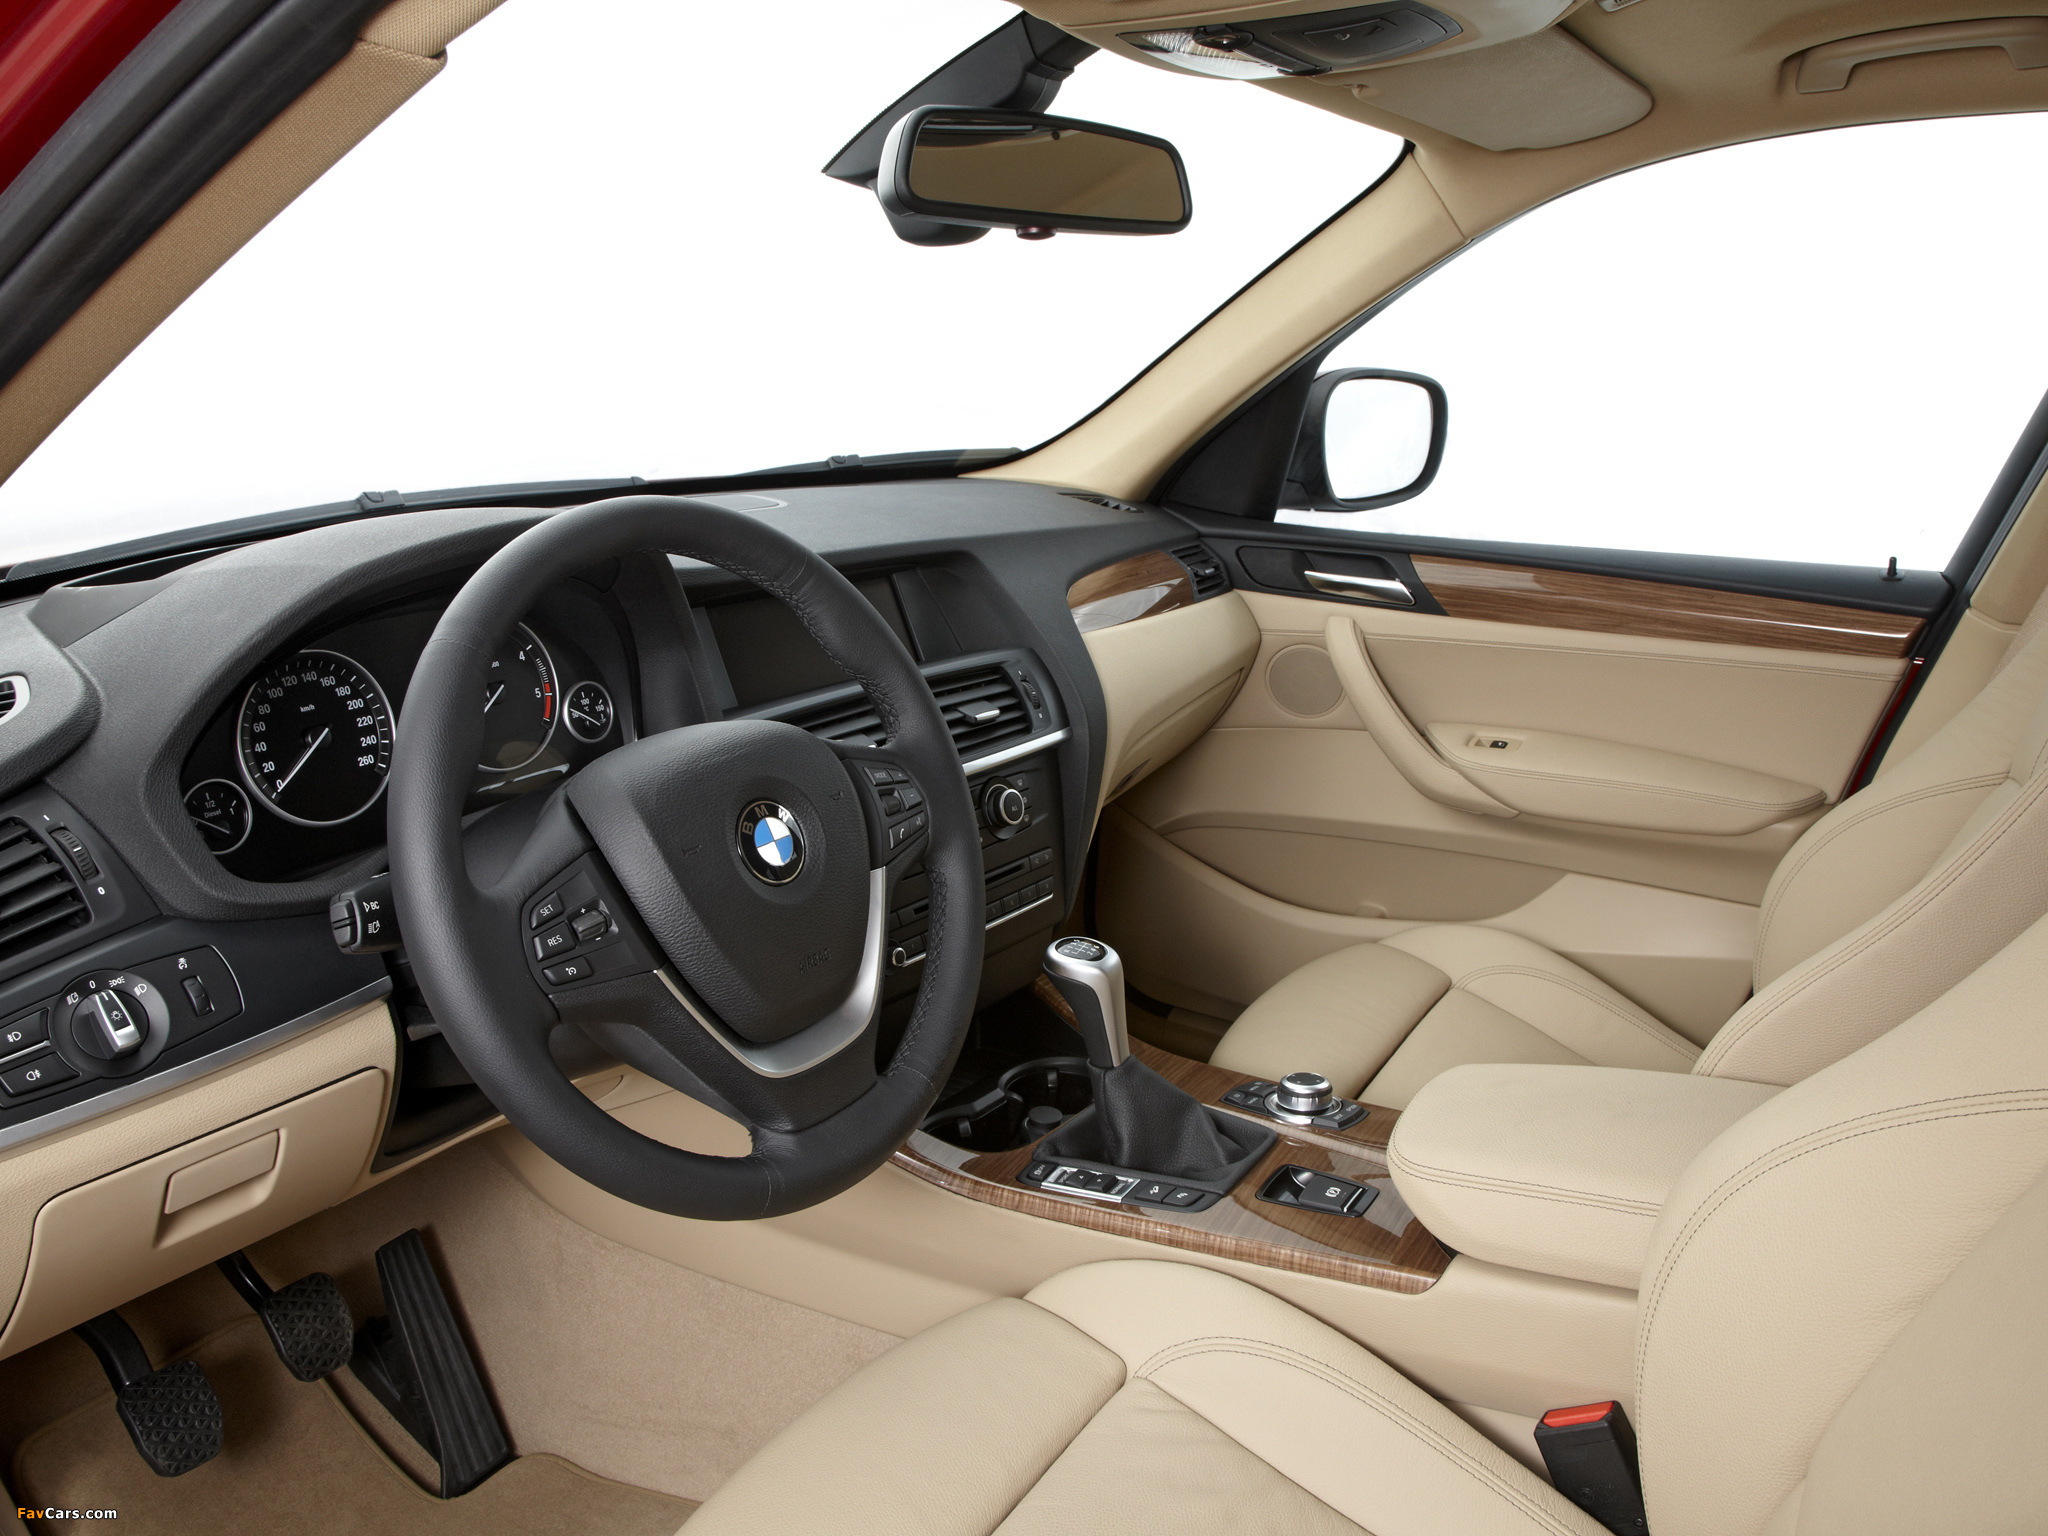 BMW X3 xDrive20d (F25) 2010 images (2048 x 1536)